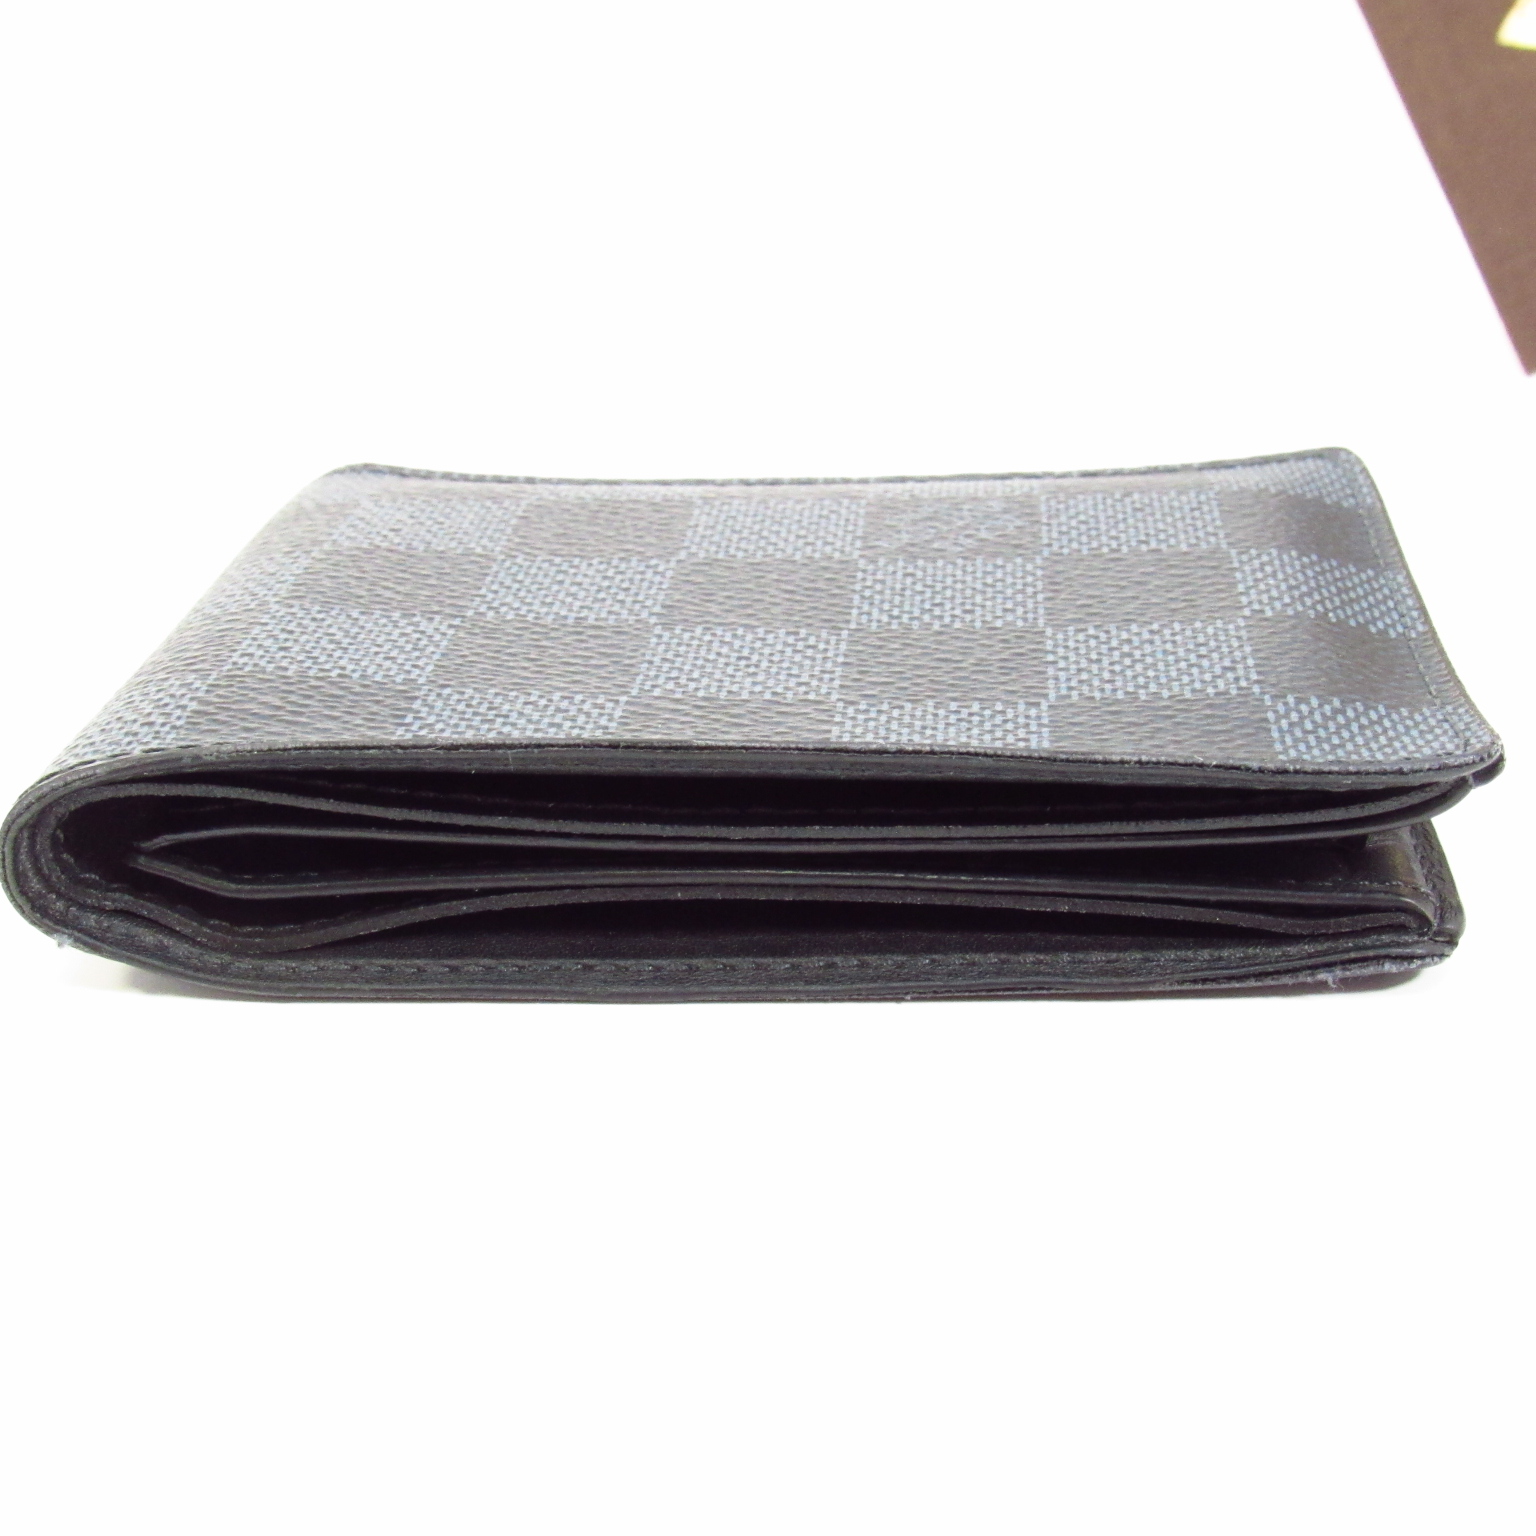 Louis Vuitton N62239 Portefeuille Damier Cobalt Slender Bi-Fold Wallet